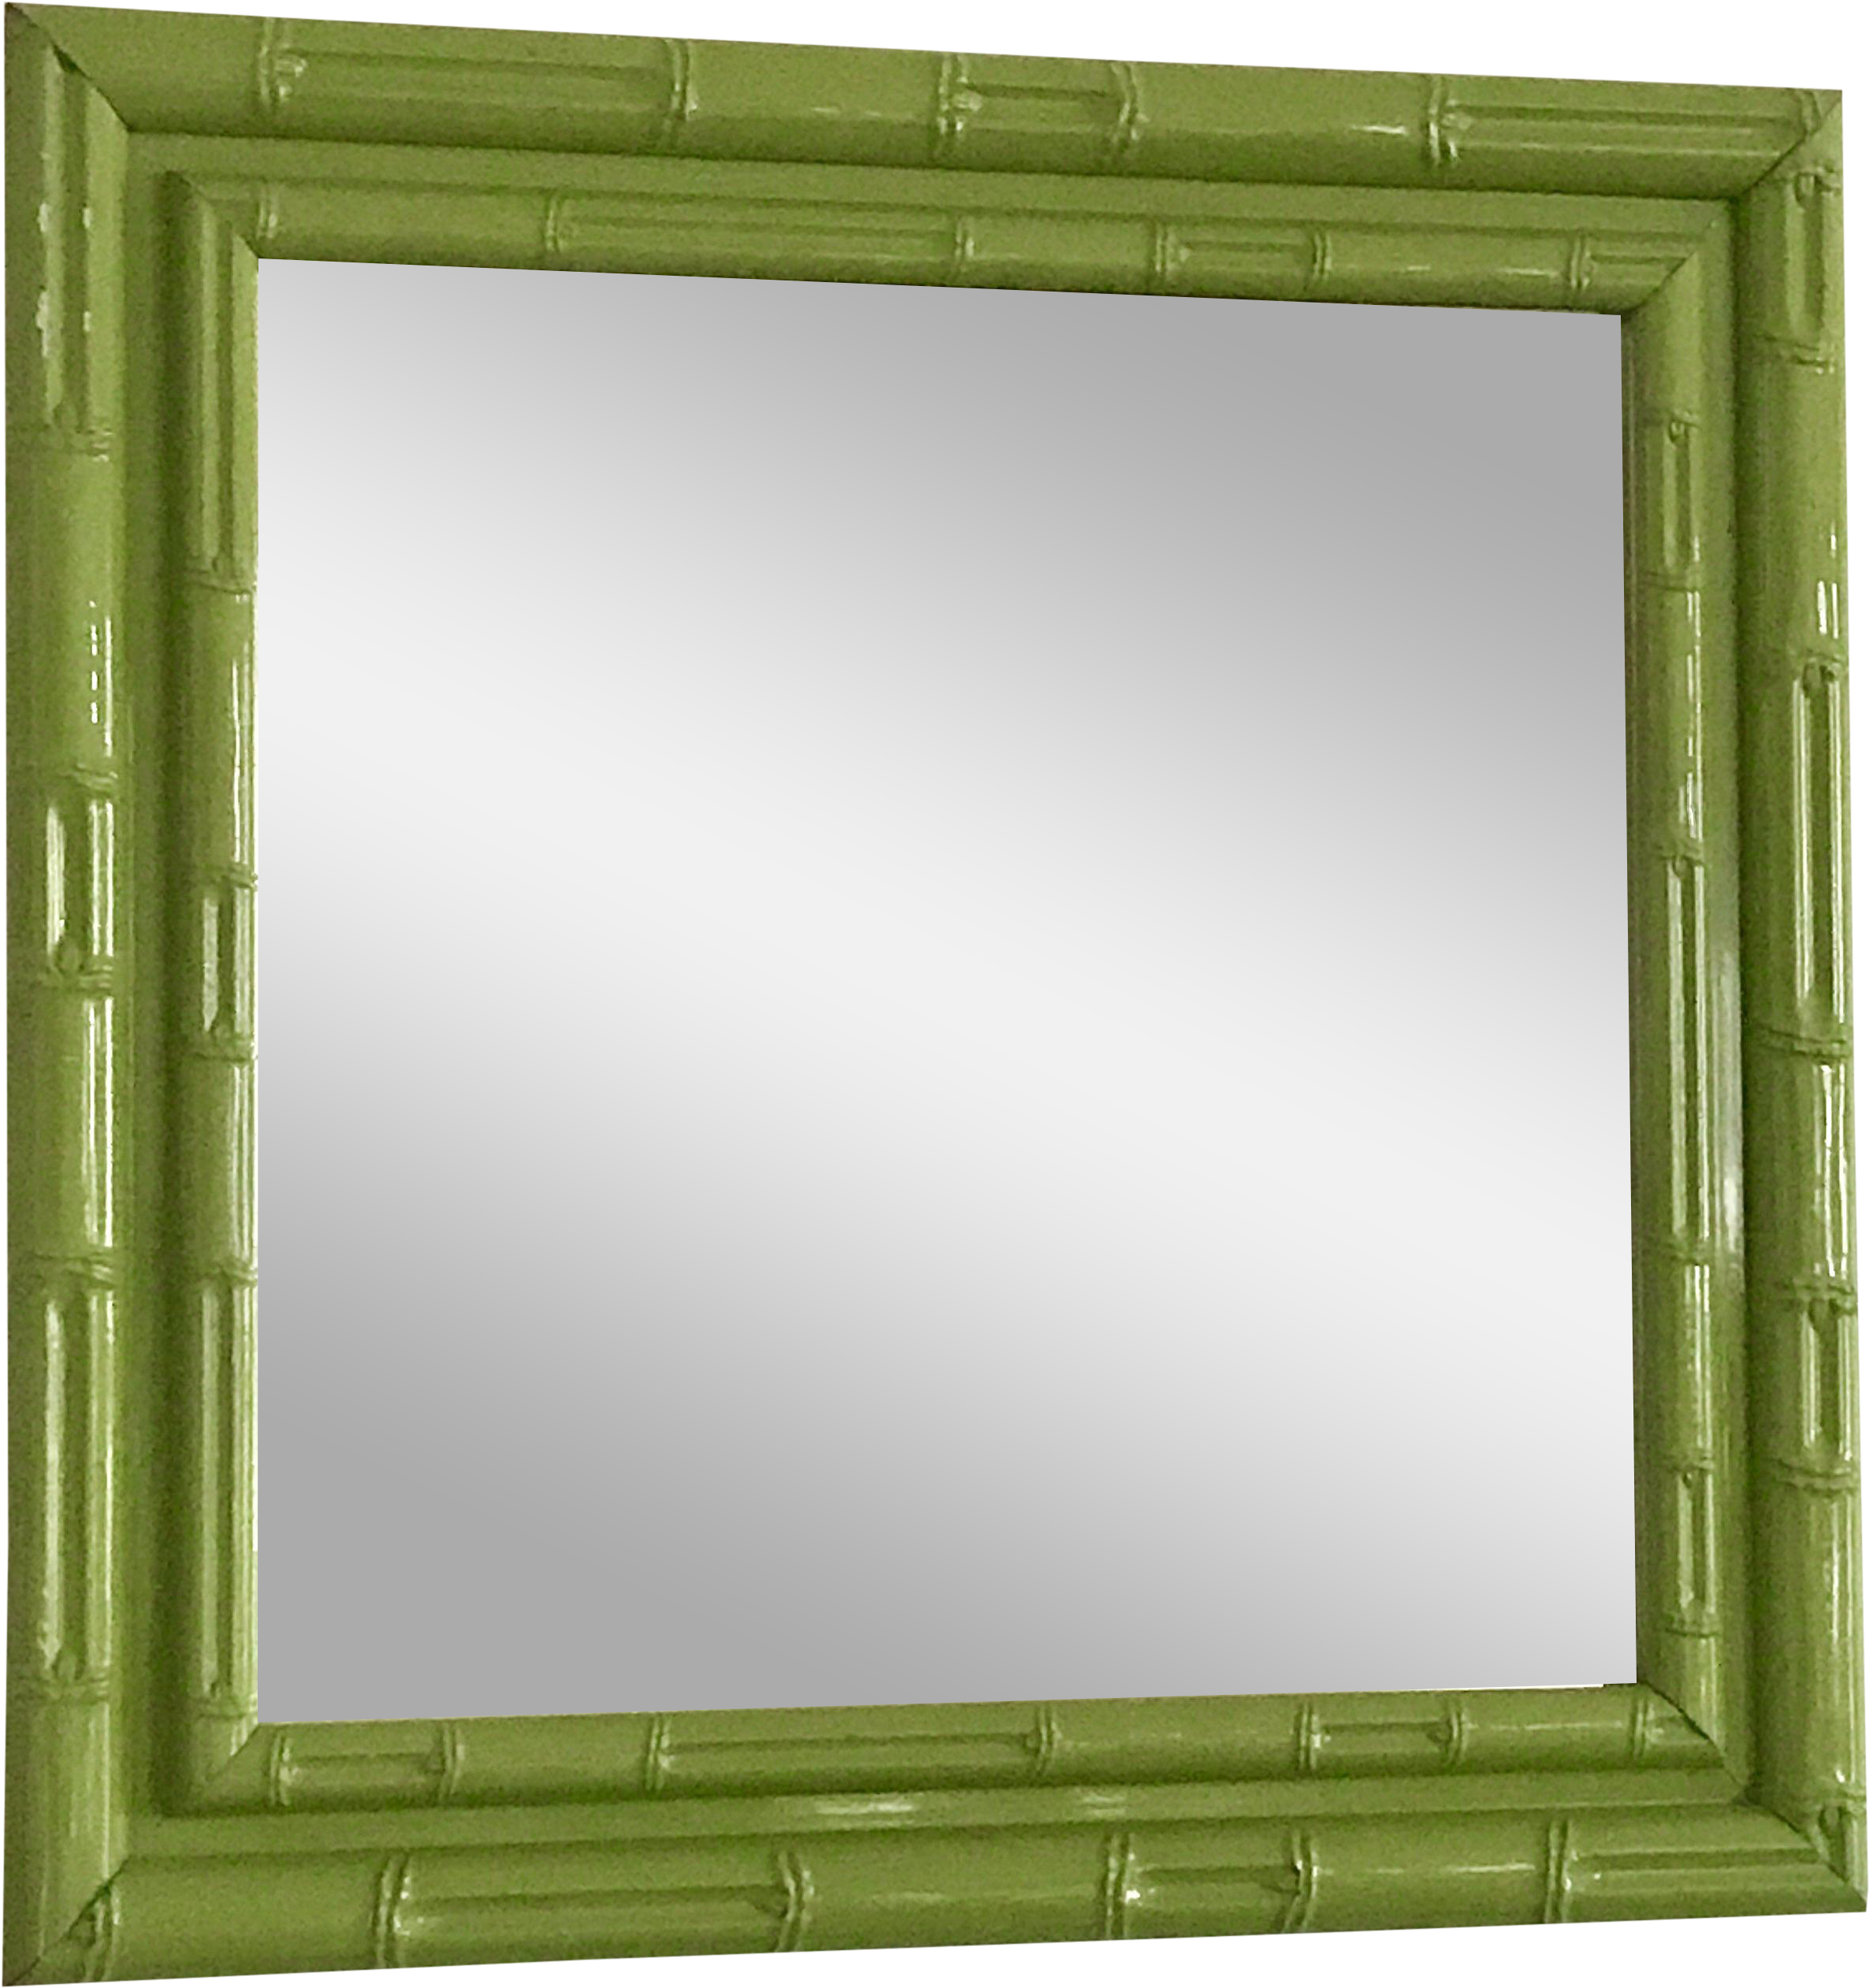 Larson Juhl Apple Green Faux Bamboo Square Wall Hanging - Mirror (2634x2802)